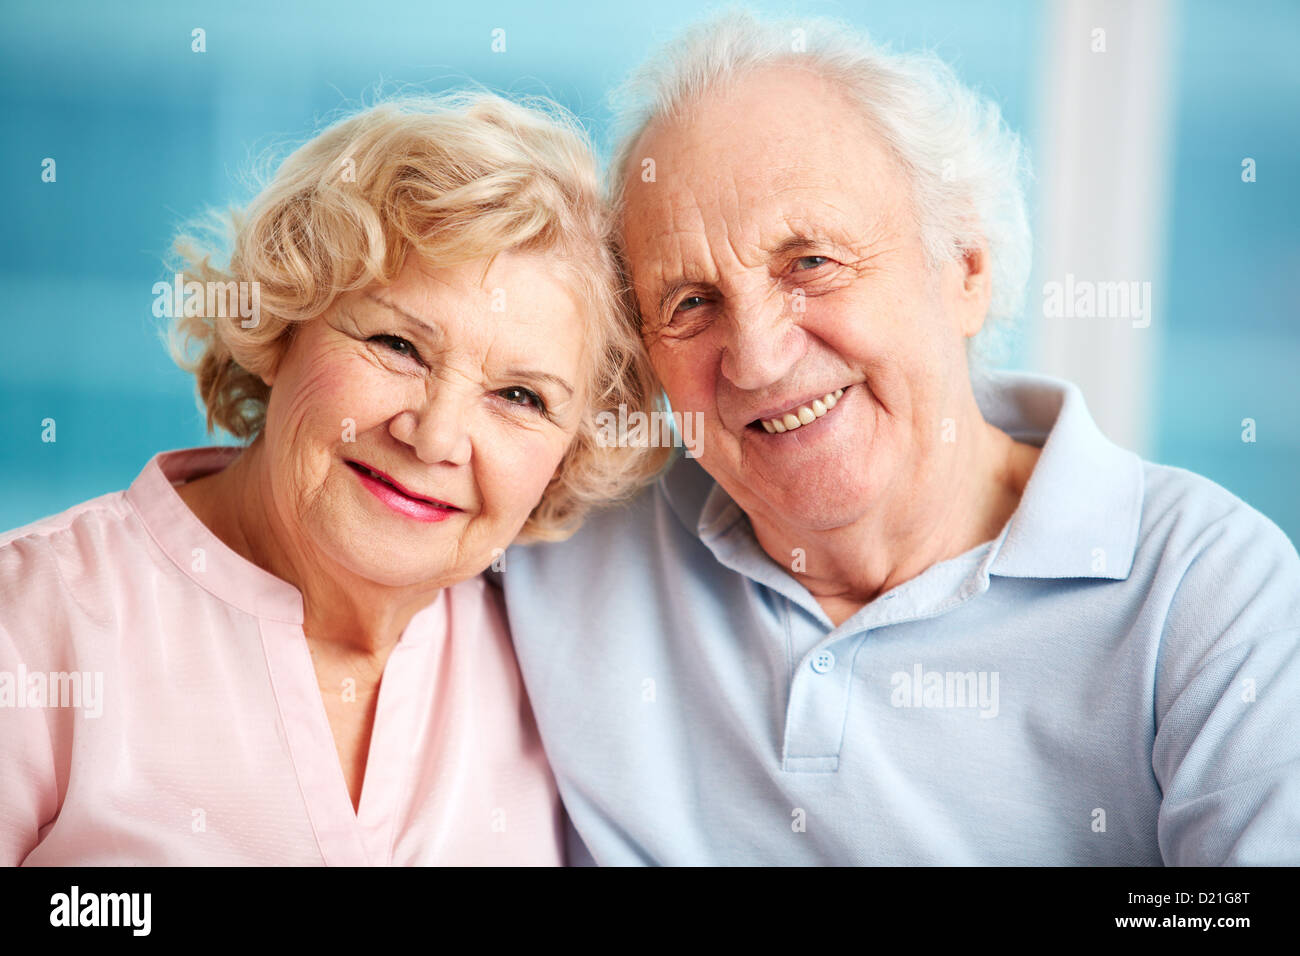 Portrait of charming seniors enjoying spending time together Stock Photo